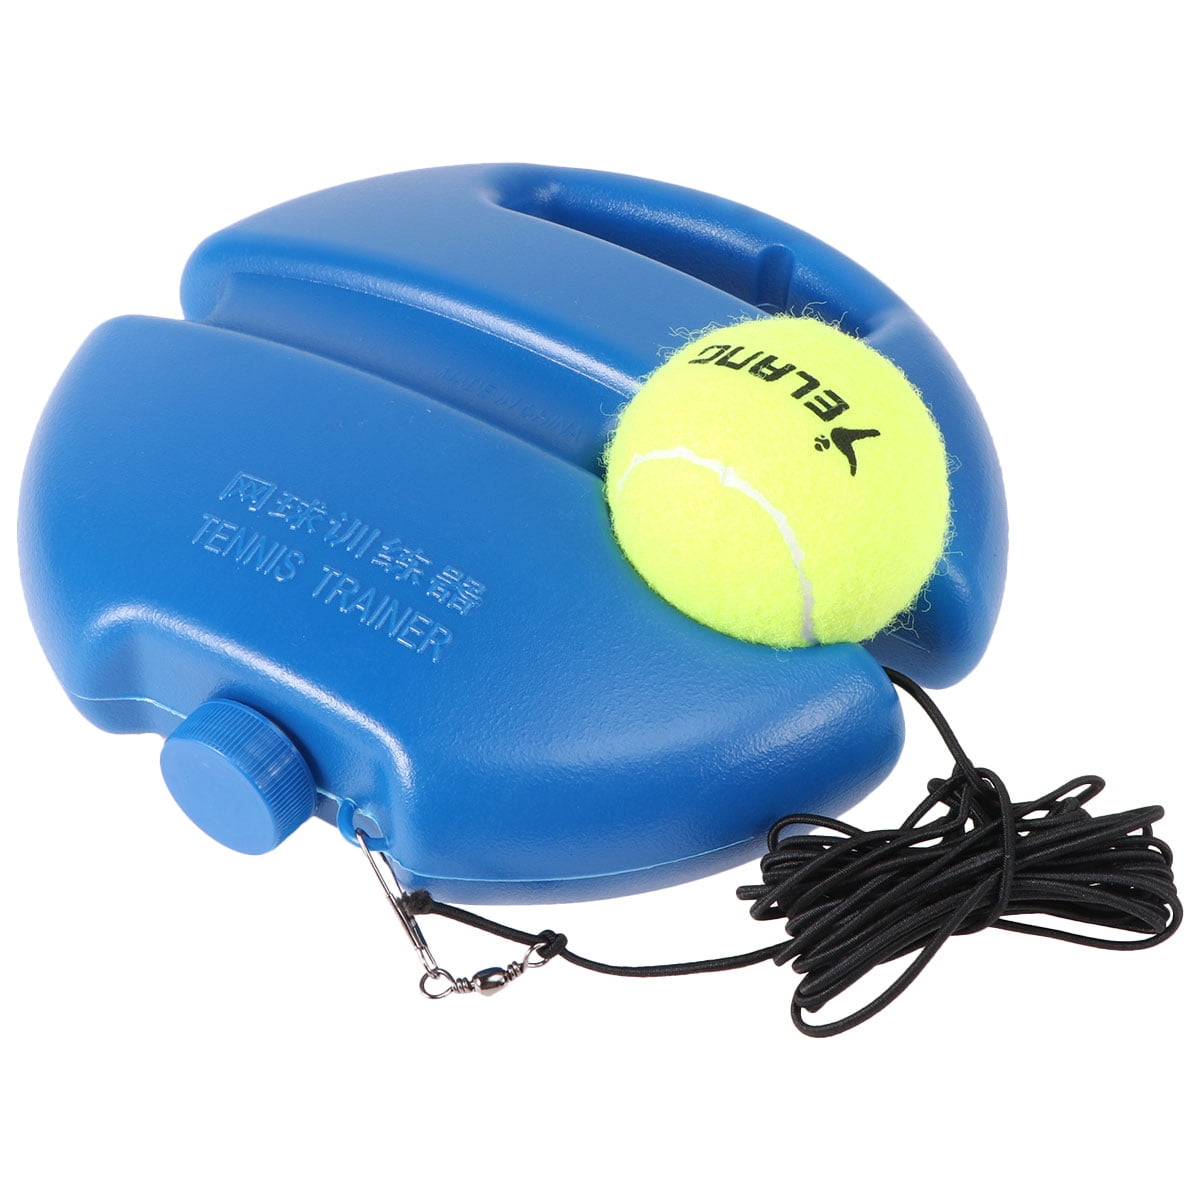 BESPORTBLE 1 Set Tennis Trainer Baseboard Tennis Self Training Tool Equipment for Beginner and Intermediate Blue Supplies 